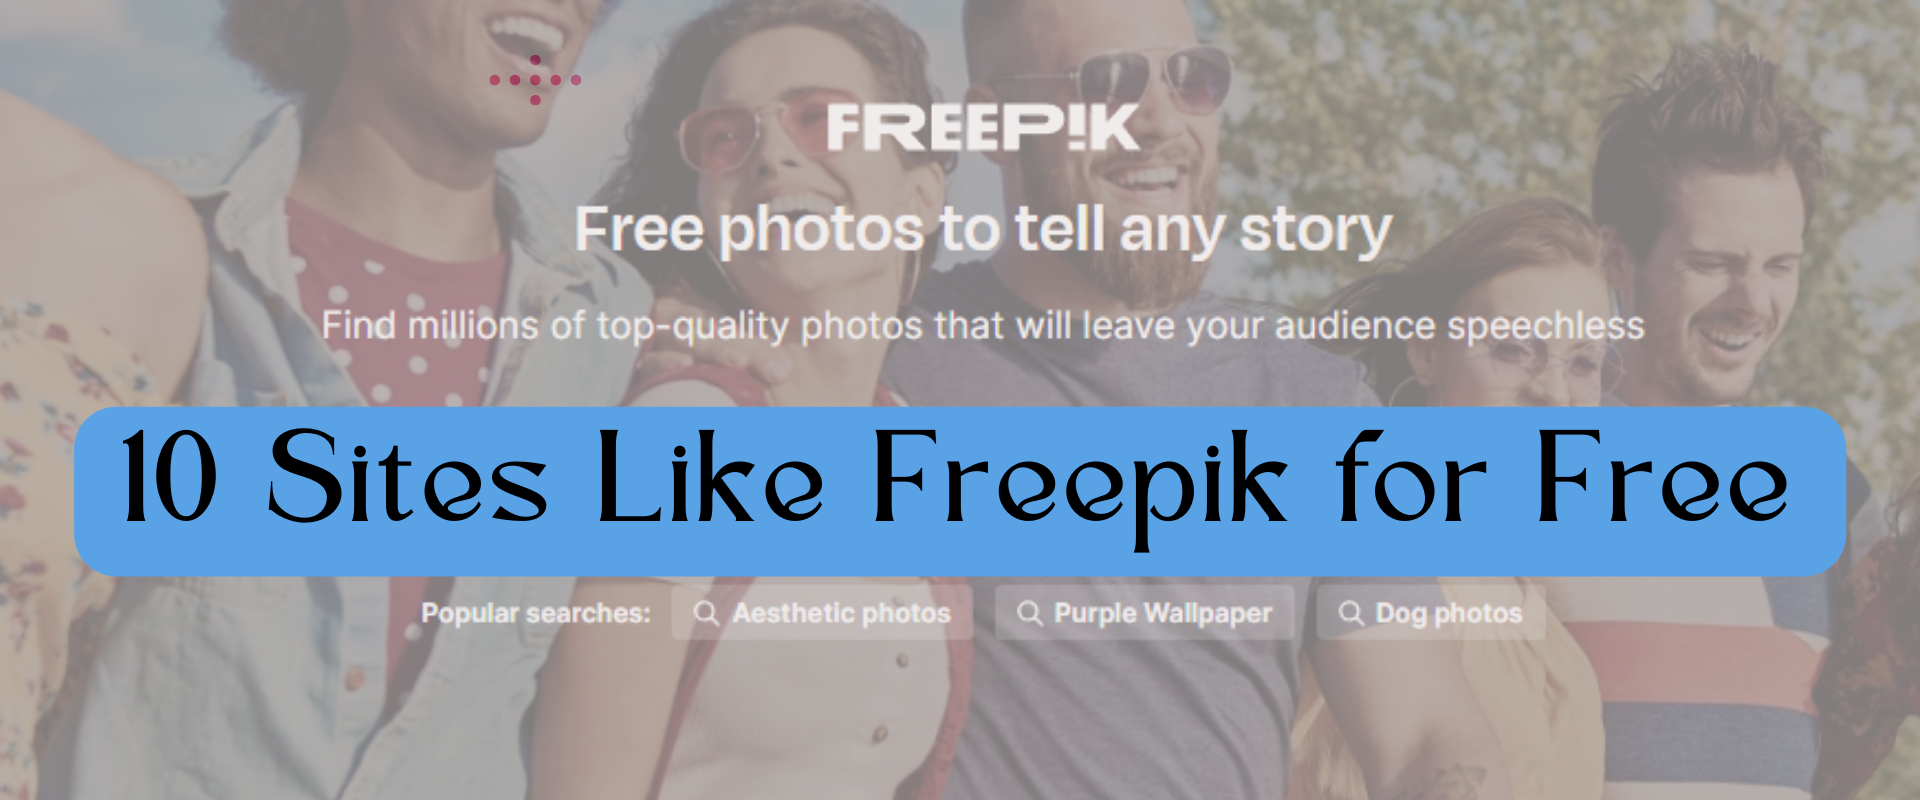 Freepik Alternatives: 10 Sites Like Freepik for Free